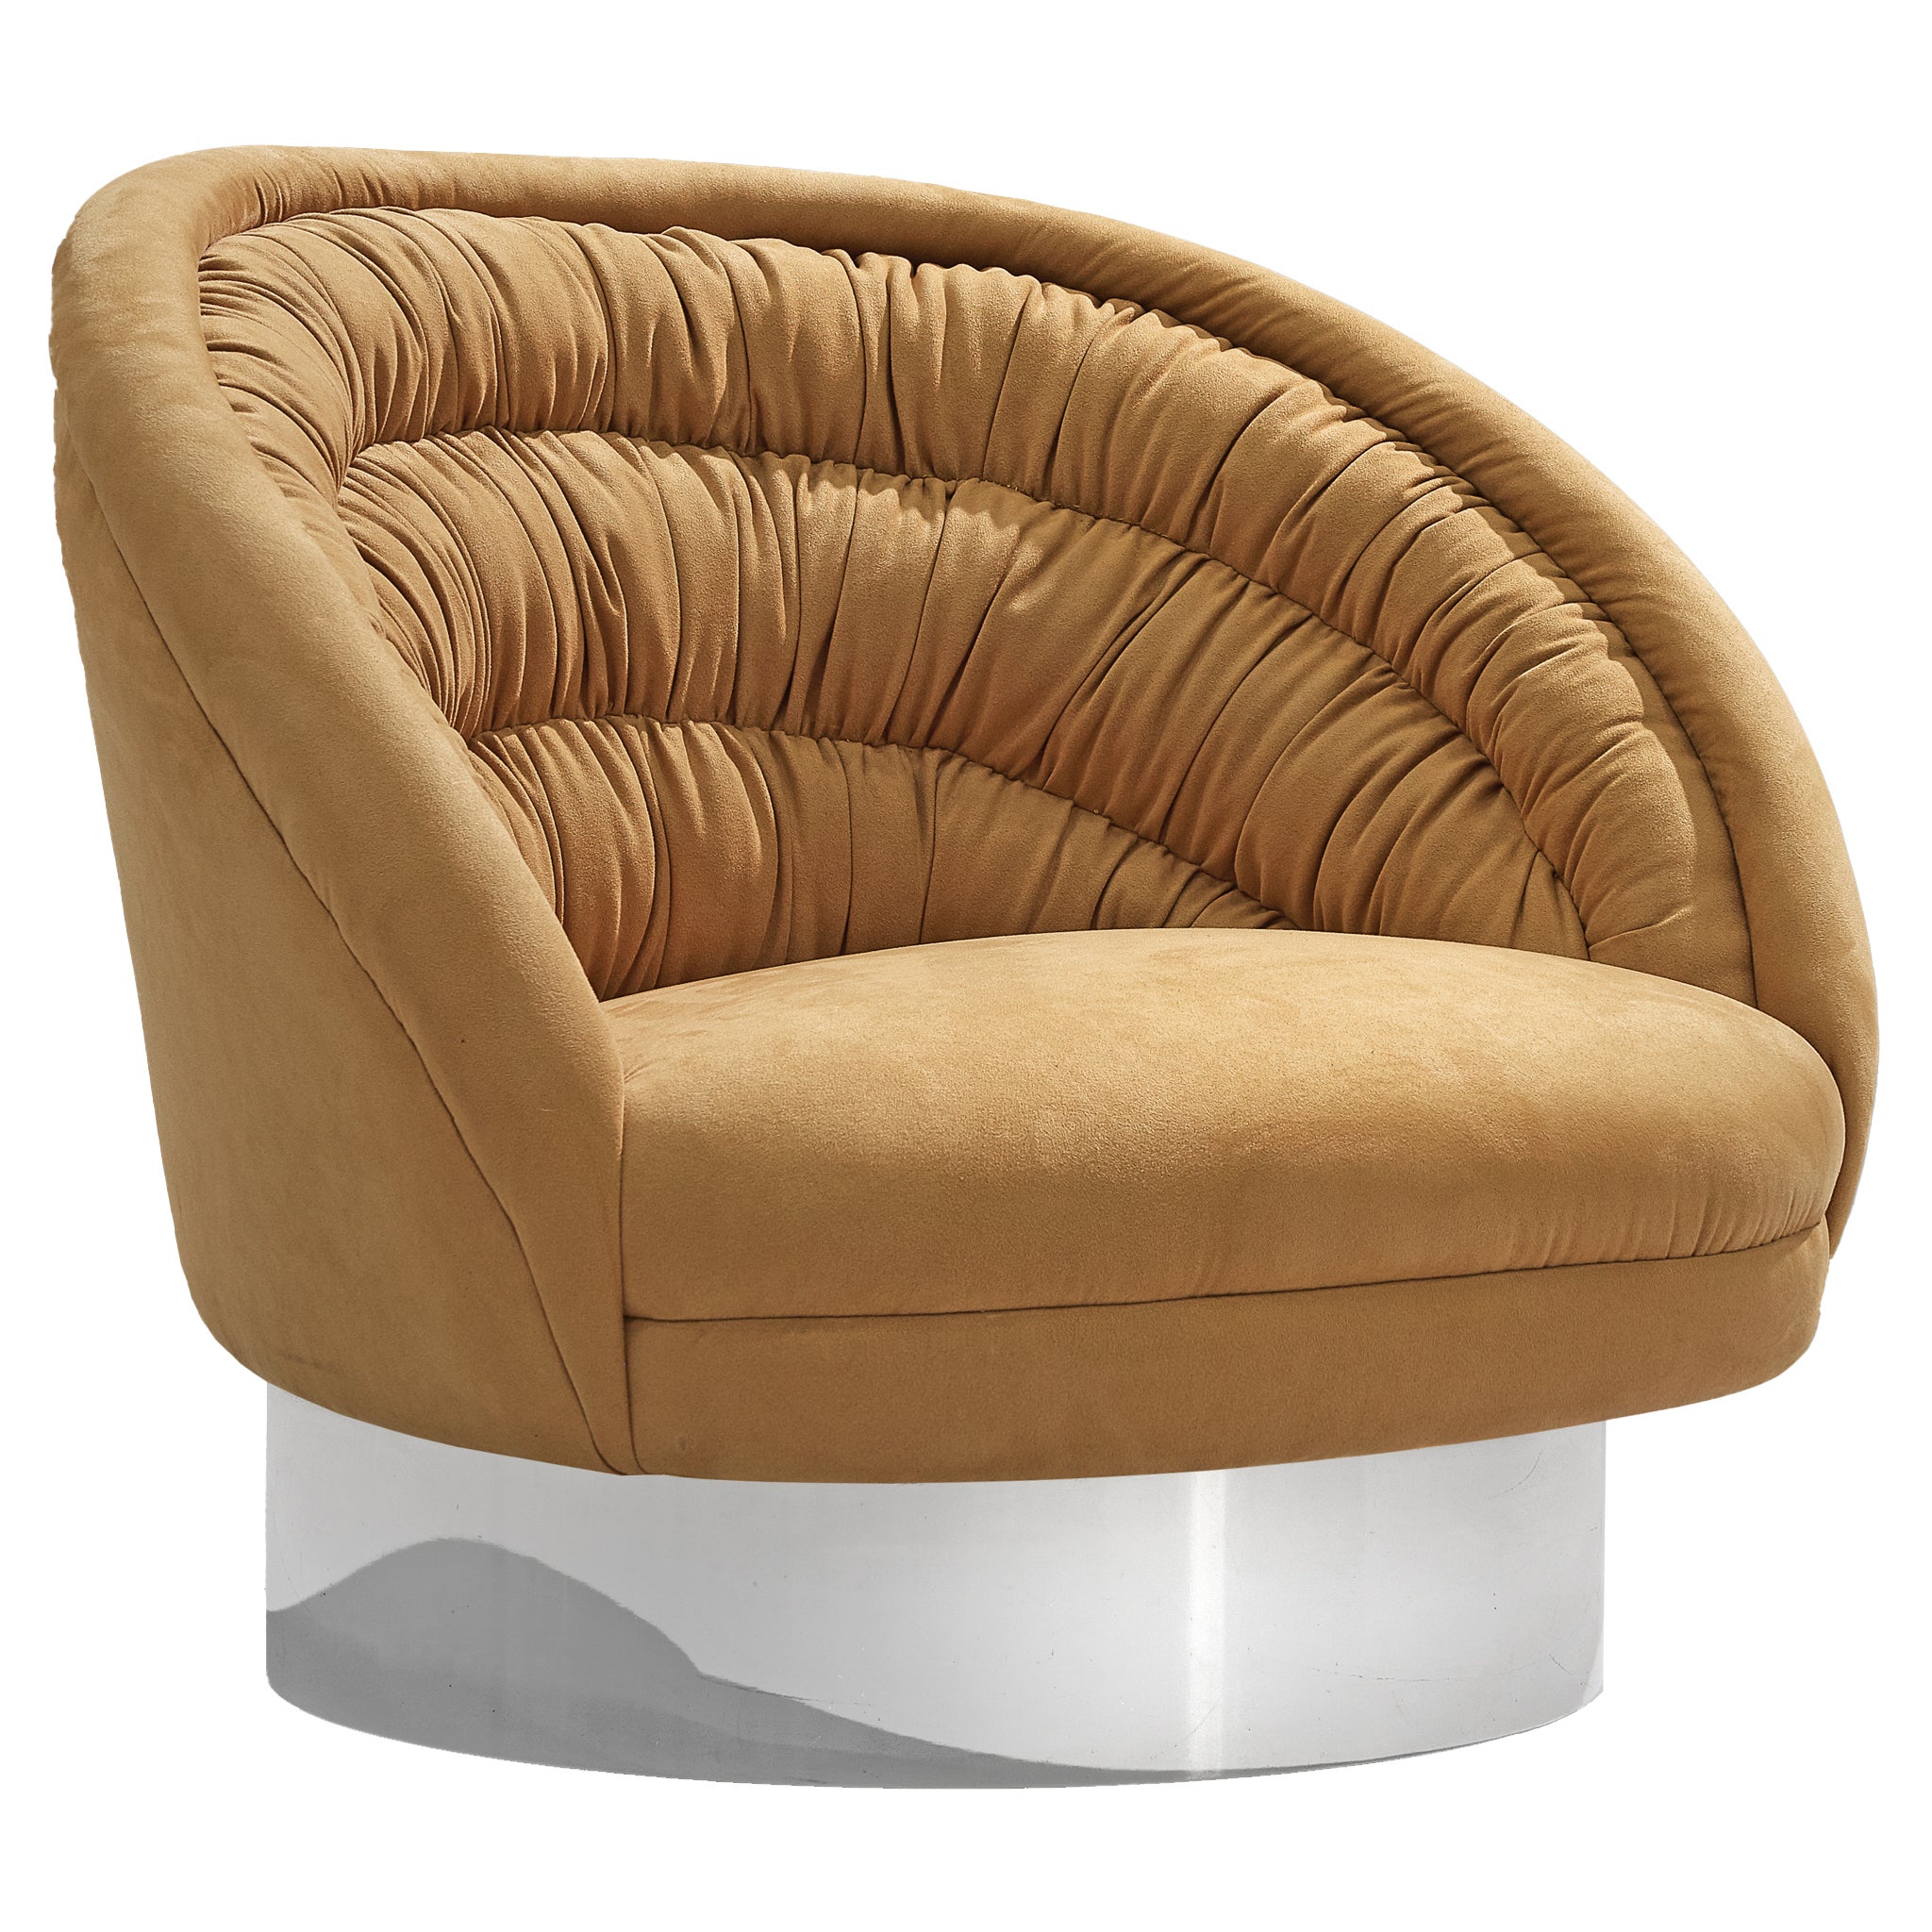 Vladimir Kagan 'Ellipse' Lounge Chair in Beige Upholstery For Sale